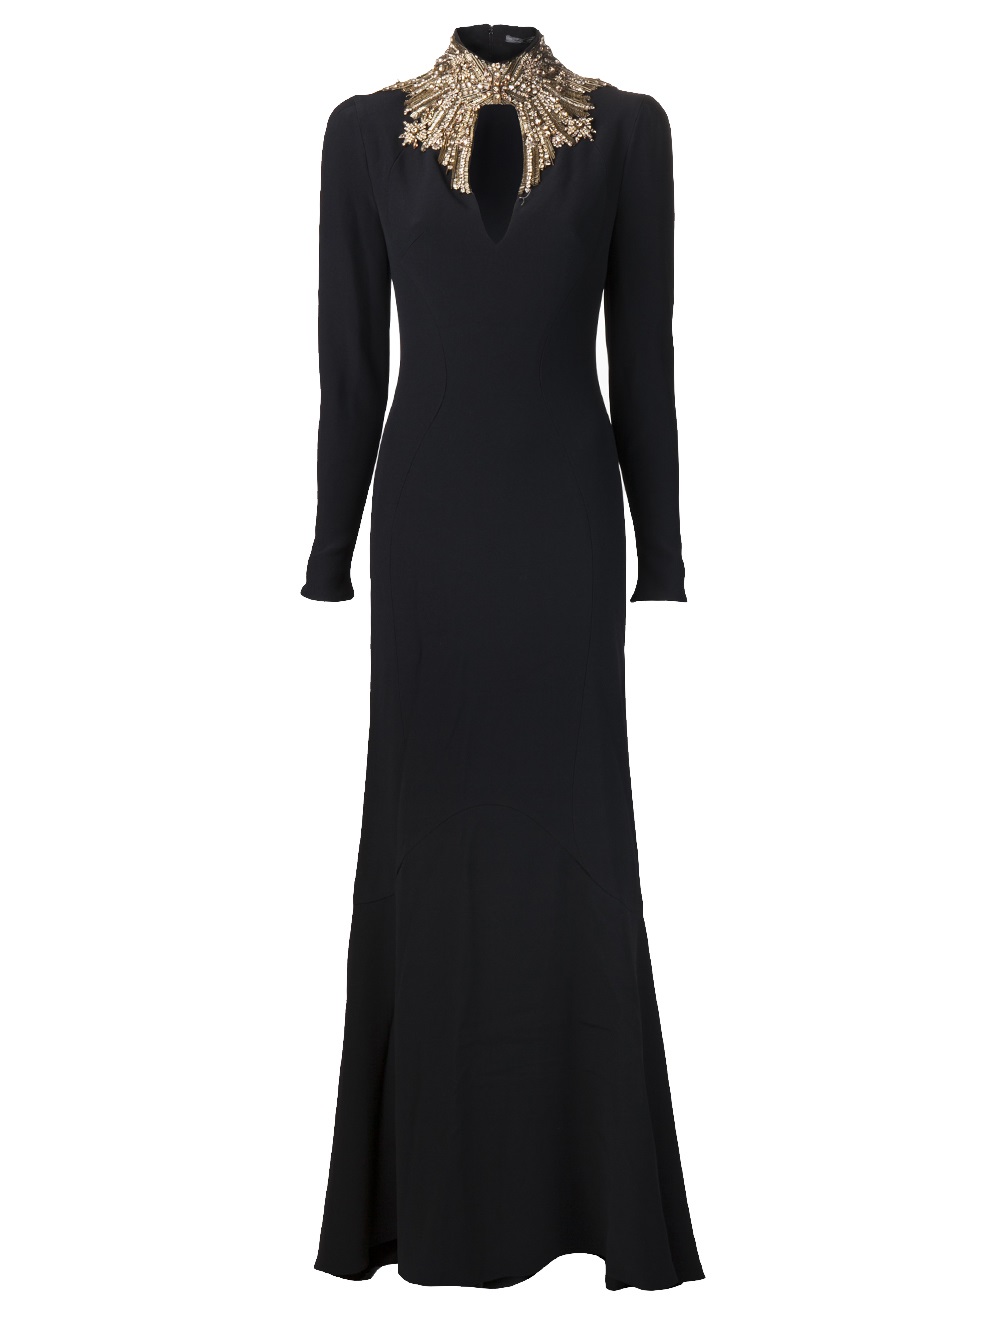 Lyst - Alexander Mcqueen Embellished High Neck Gown in Black